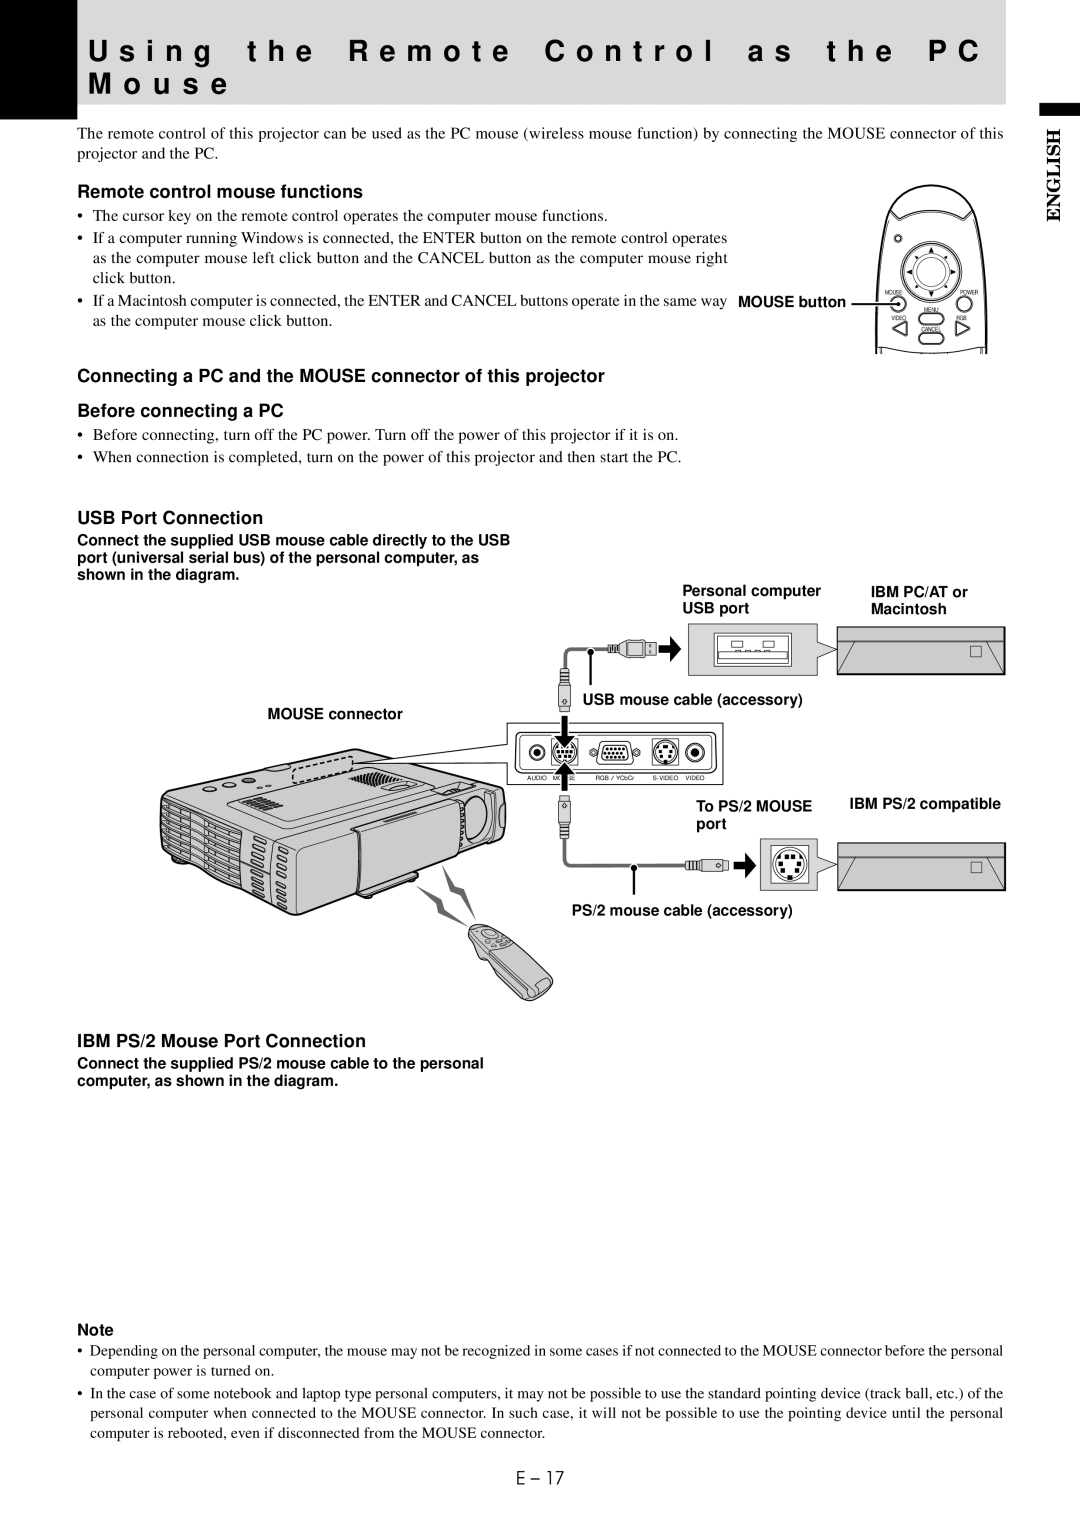 Mitsubishi Electronics LVP-X30U Remote control mouse functions, USB Port Connection, IBM PS/2 Mouse Port Connection 